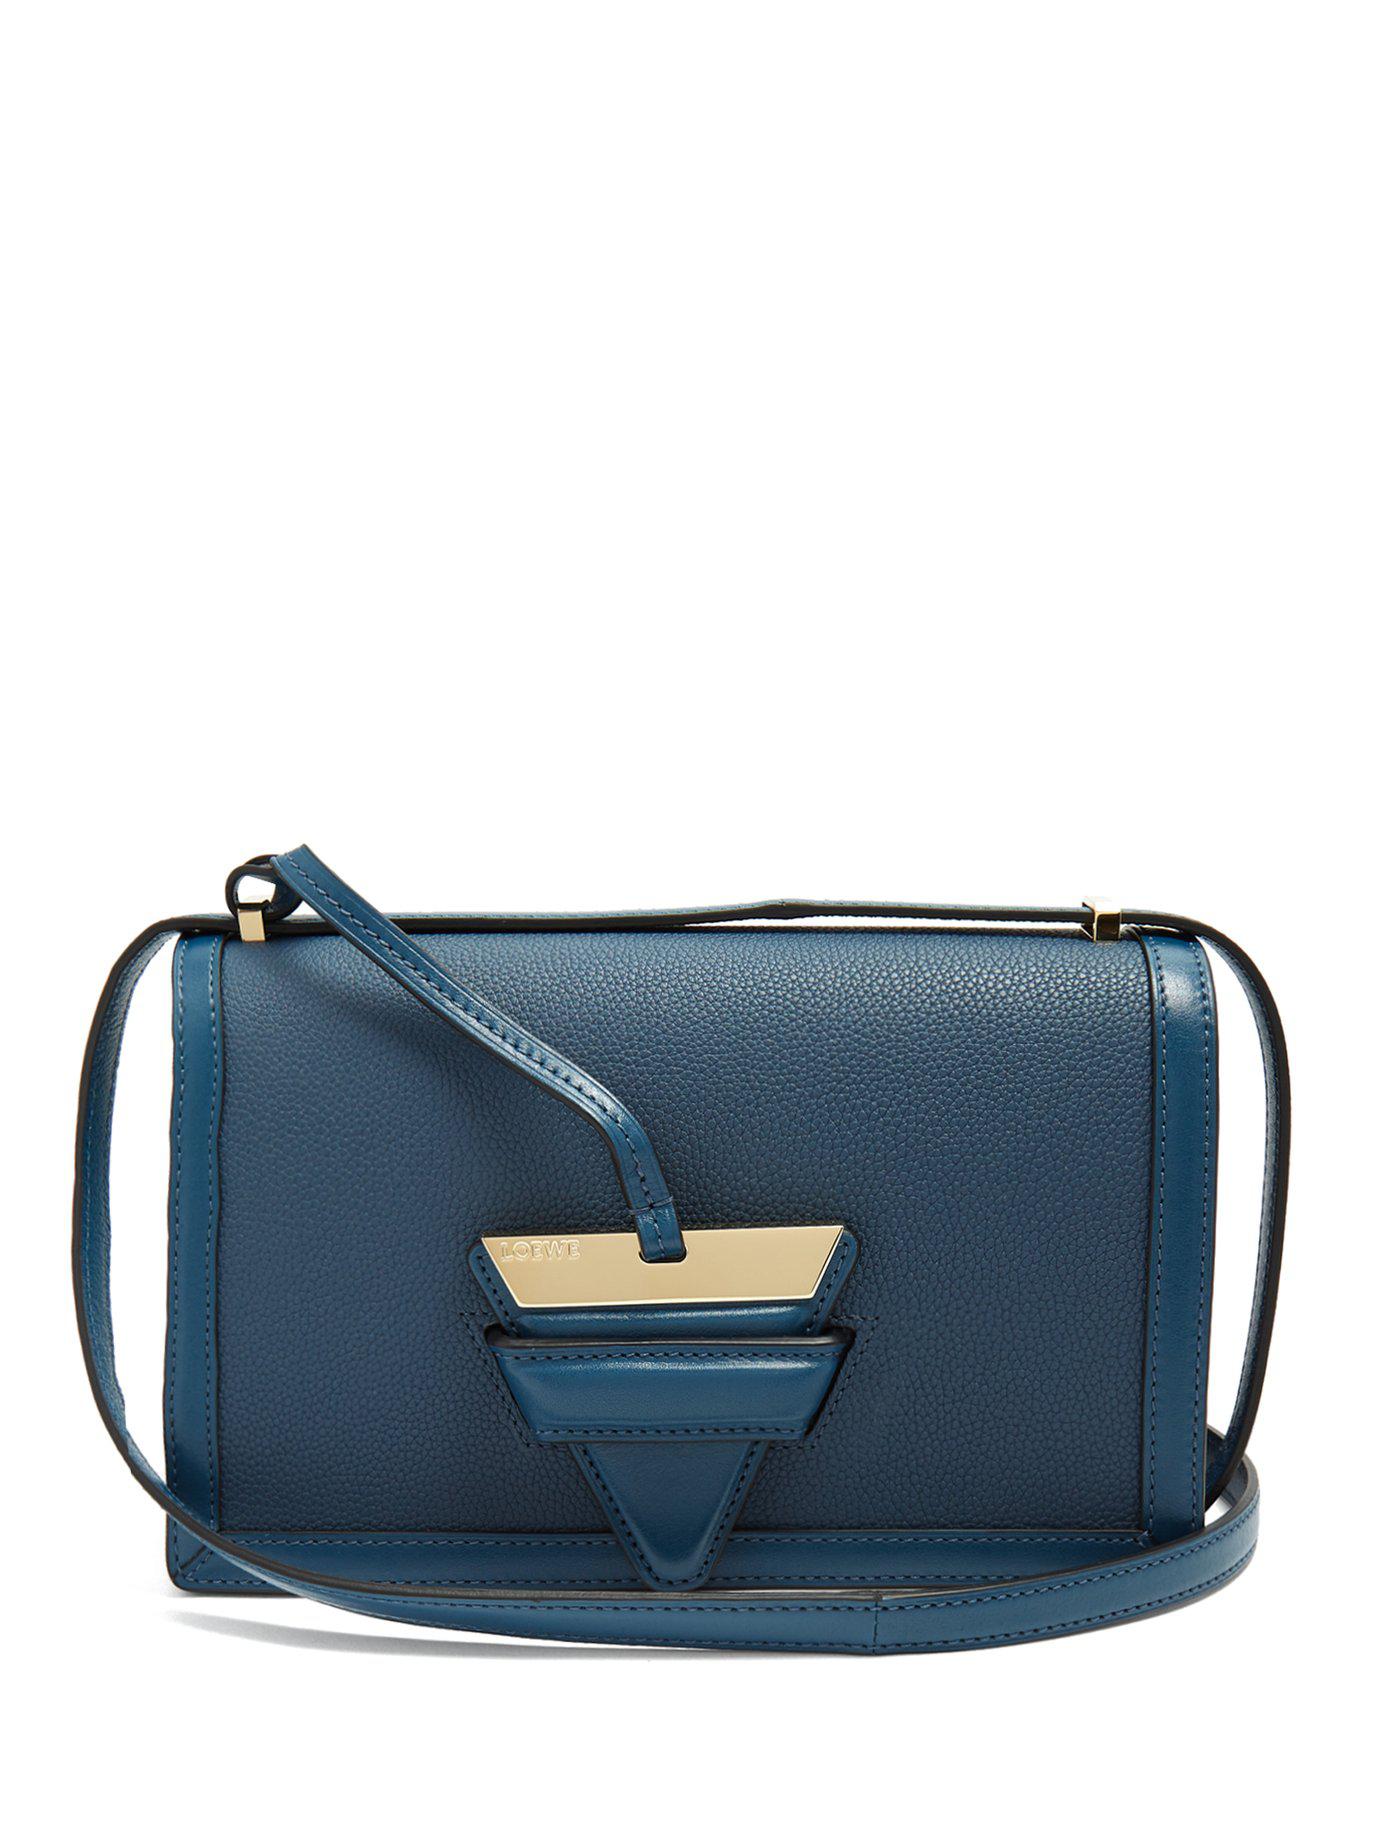 Lyst - Loewe - Barcelona Medium Leather Shoulder Bag - Womens - Indigo ...